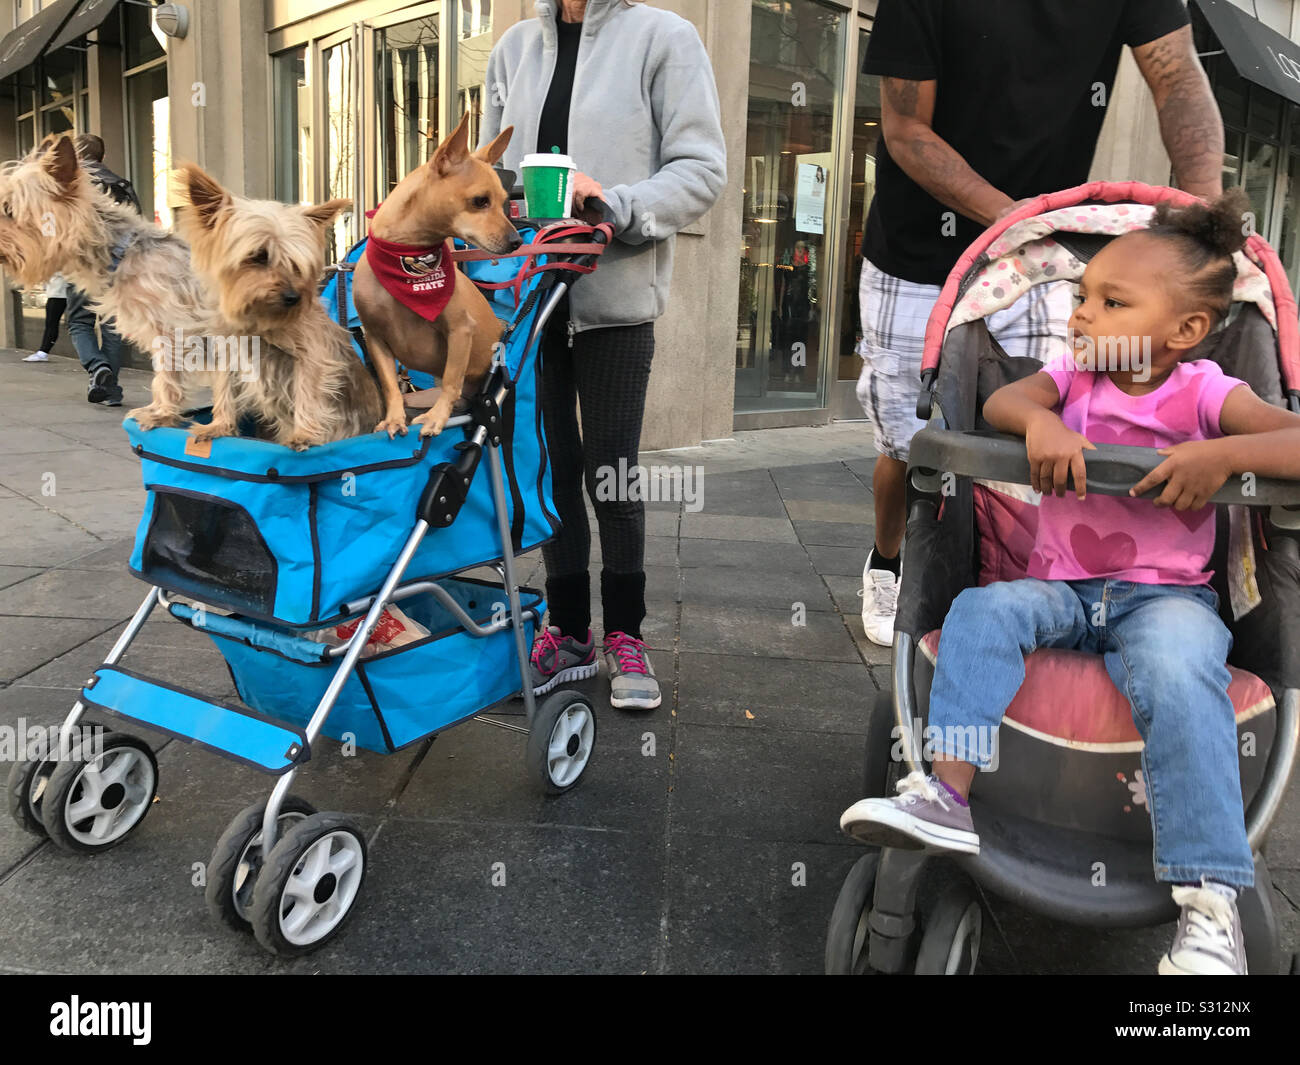 https://c8.alamy.com/comp/S312NX/dogs-in-stroller-next-to-toddler-in-stroller-in-downtown-denver-colorado-S312NX.jpg